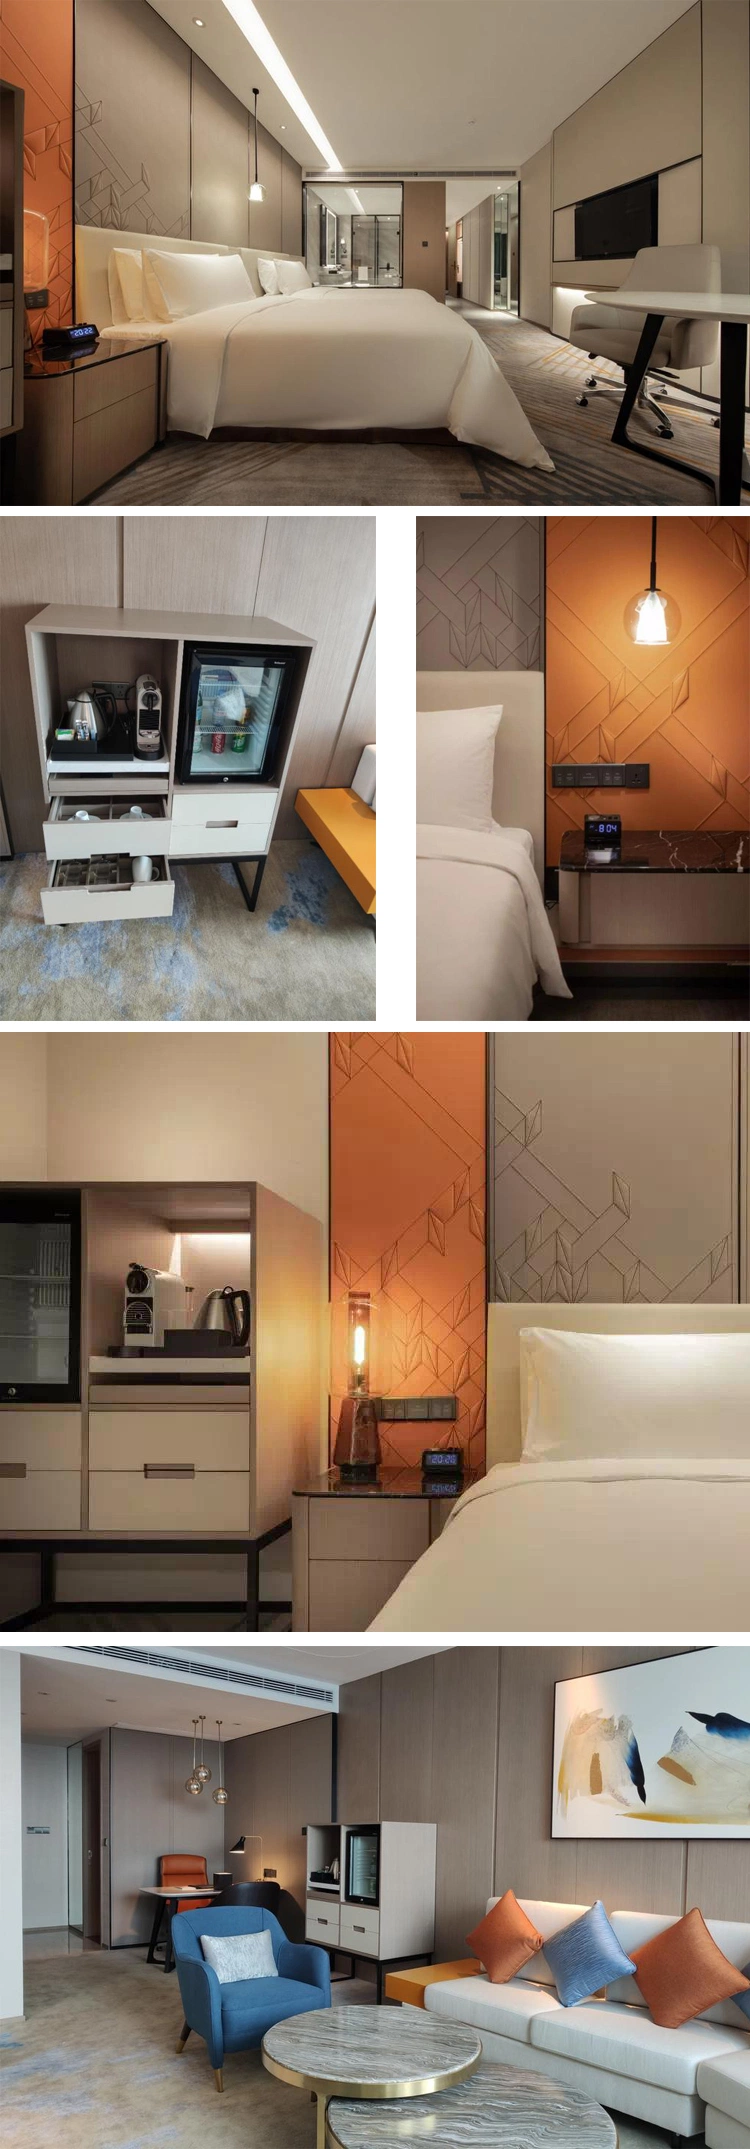 Hotel Super Luxury Bedroom Furniture Suite Set for Luxury Apartment / 5 Star Hotel